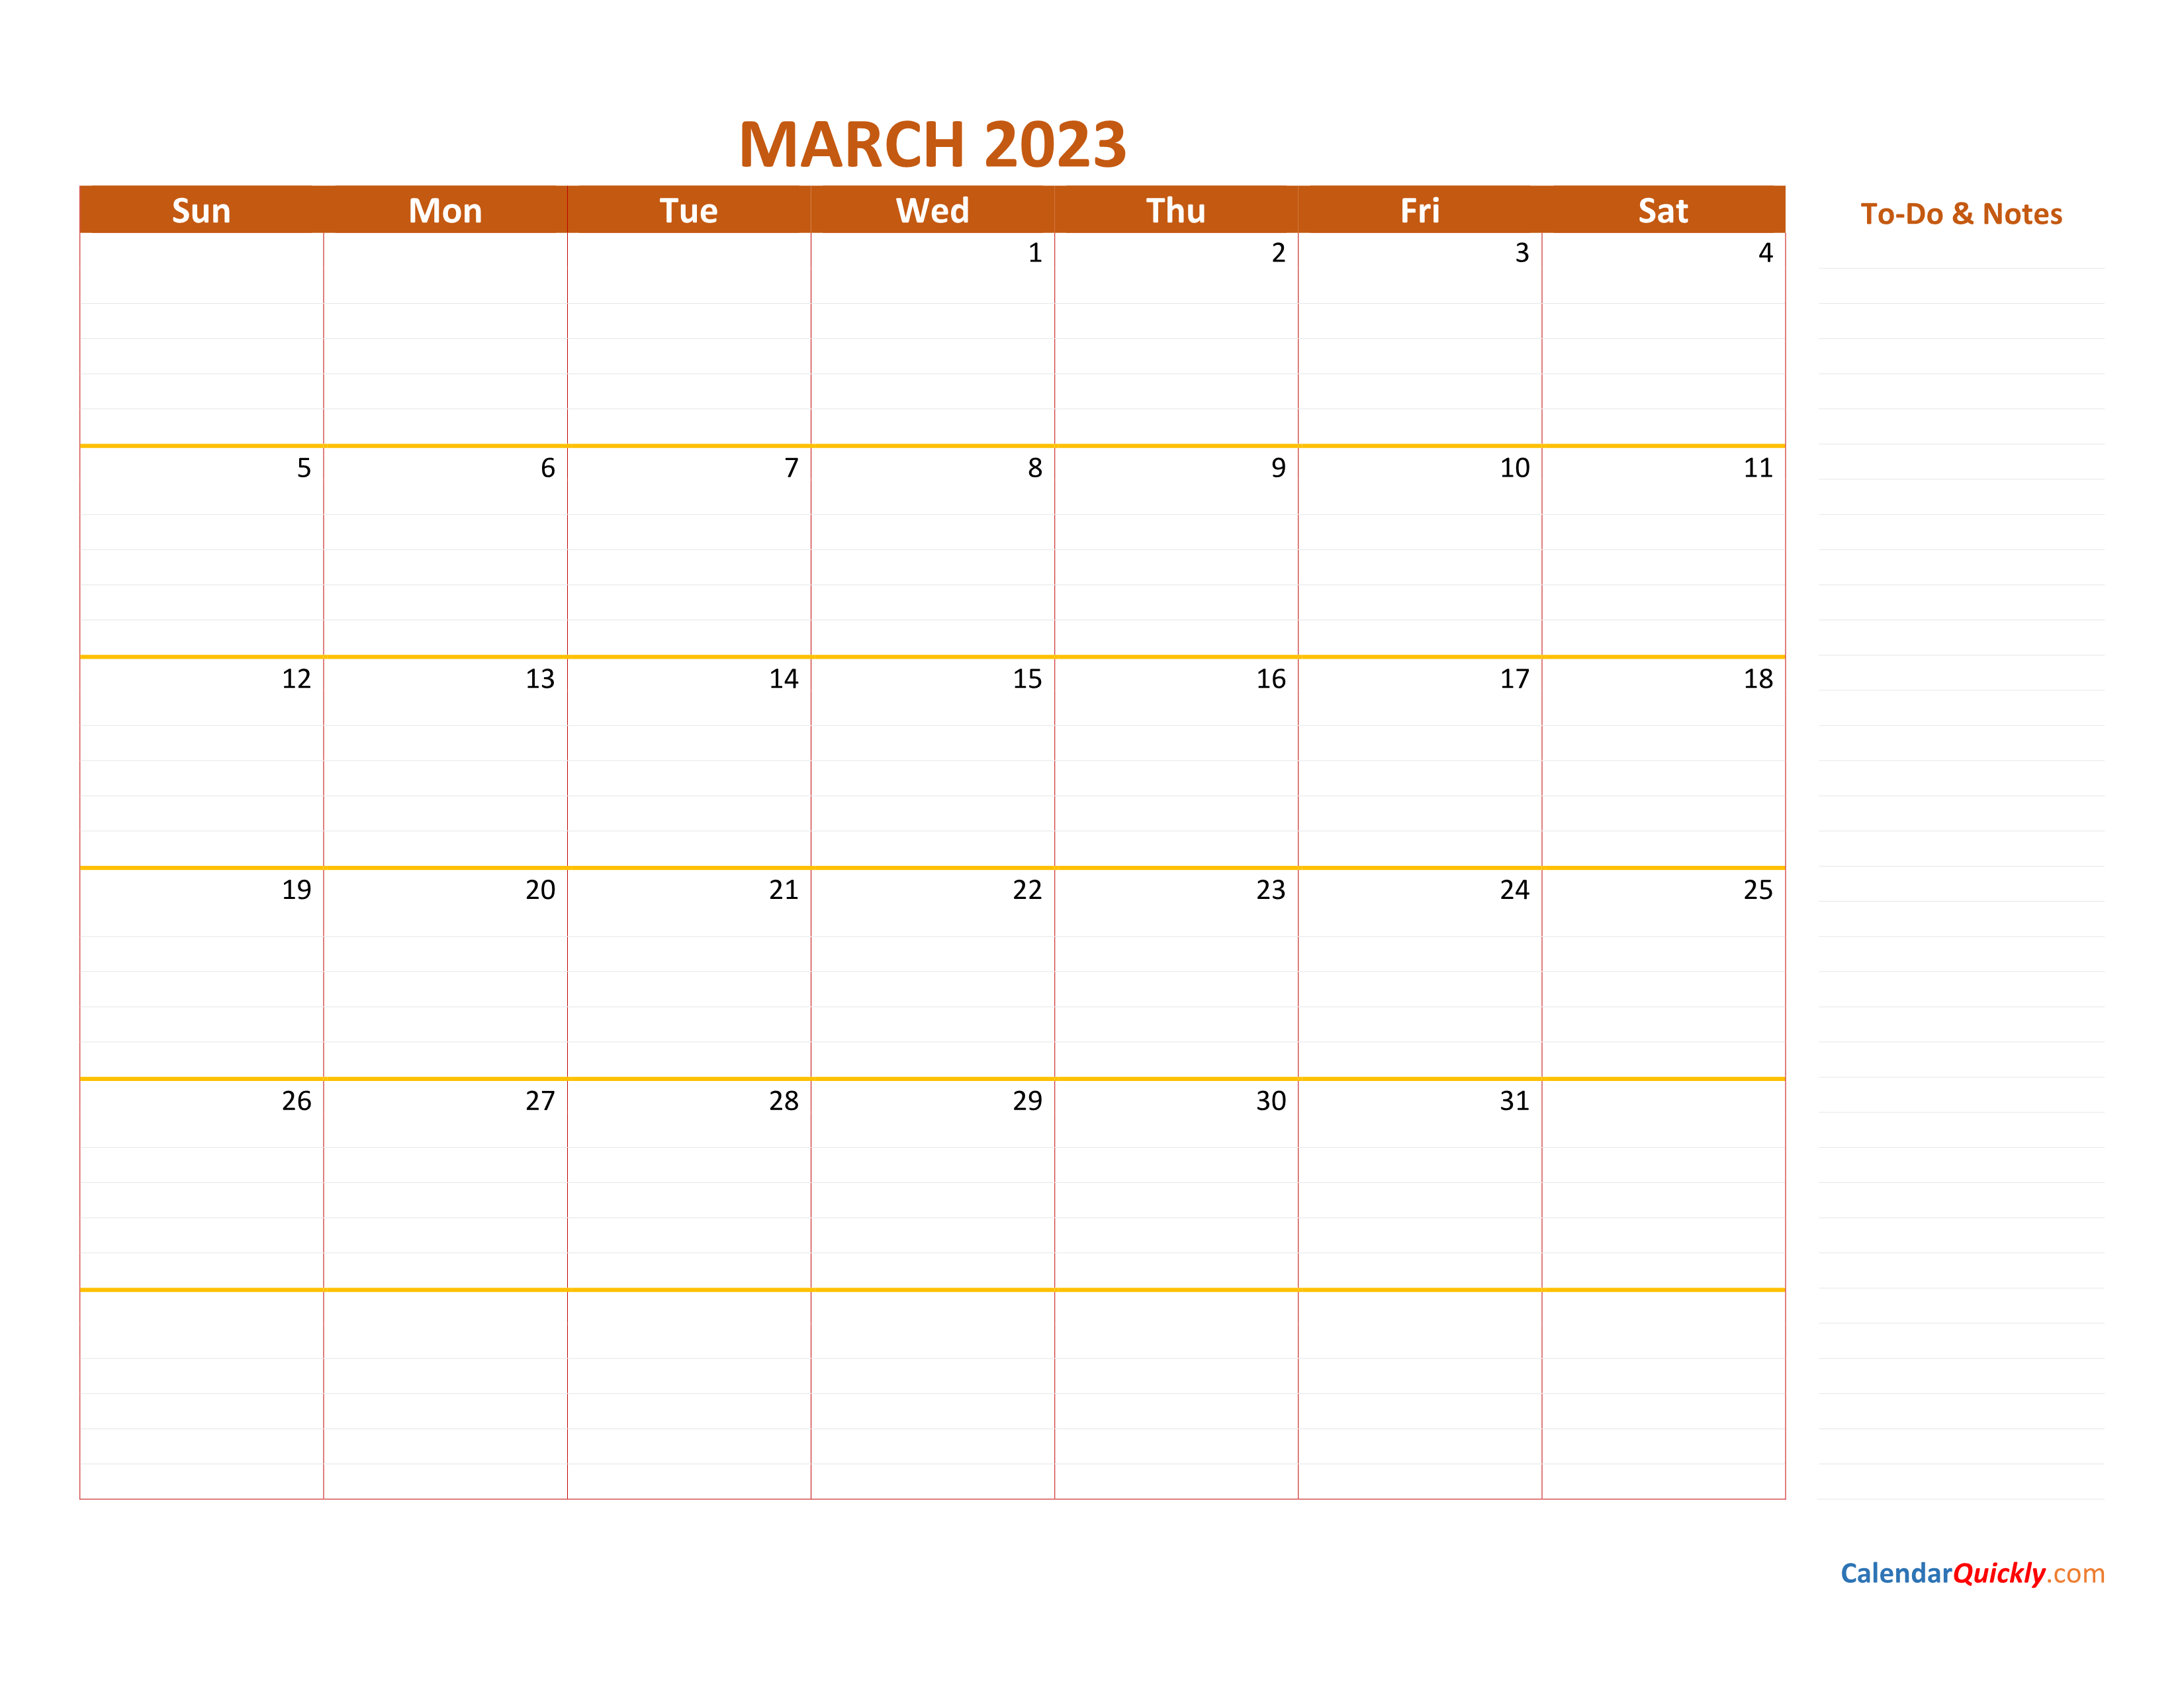 march-2023-calendar-calendar-quickly